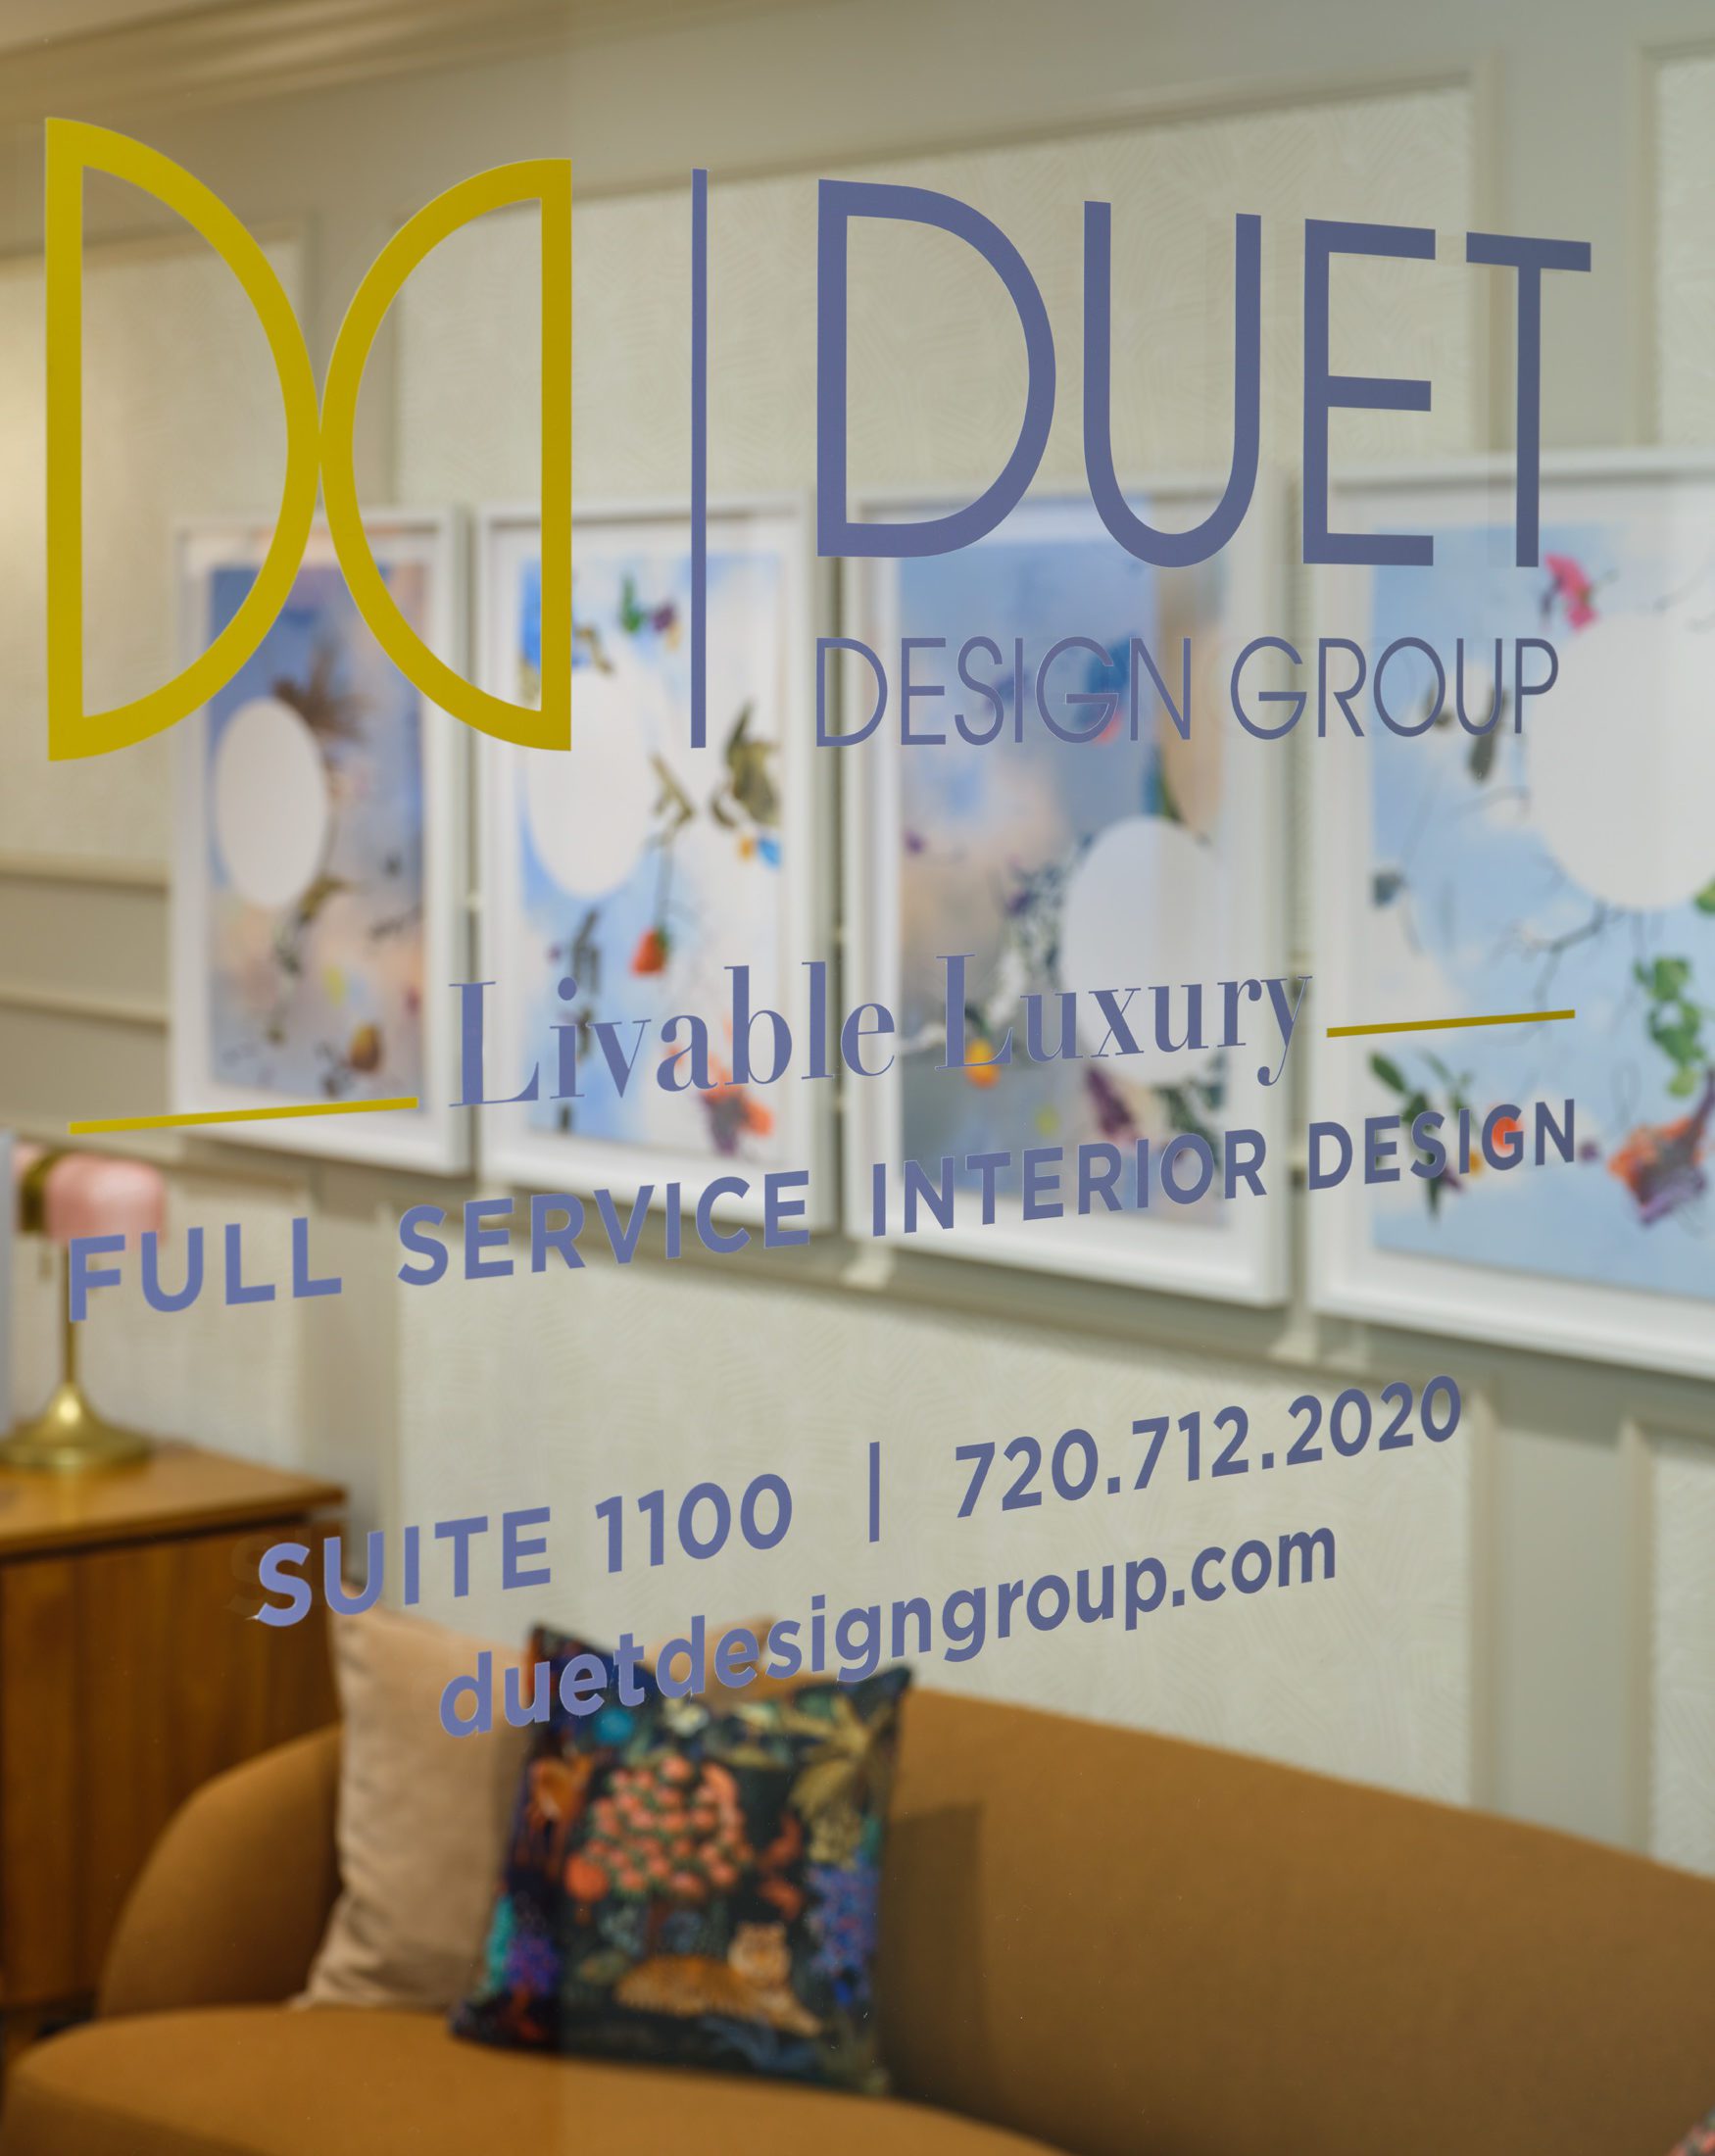 Duet Design Group - Commercial Interior Design